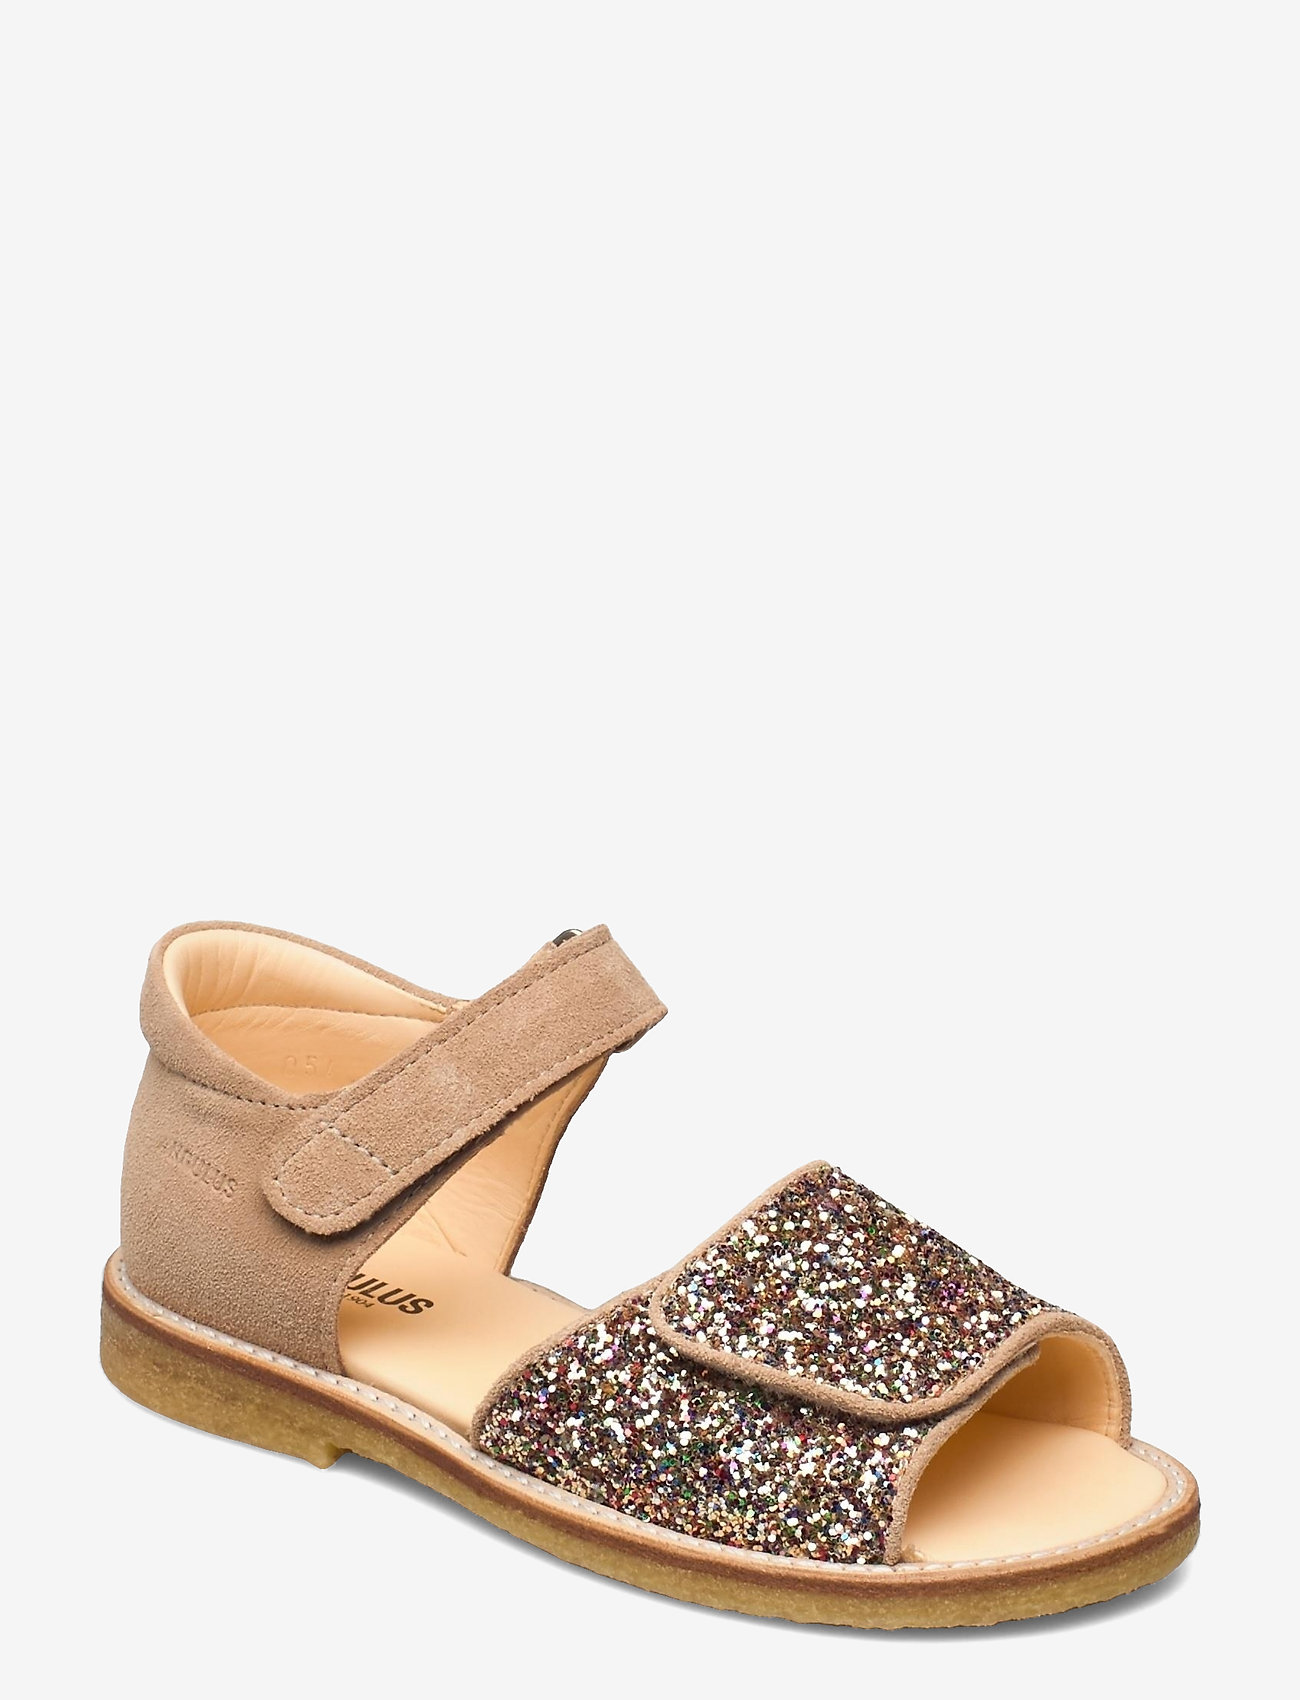 ANGULUS - Sandals - flat - open toe - clo - sommarfynd - 1149/2488 sand/multi glitter - 0